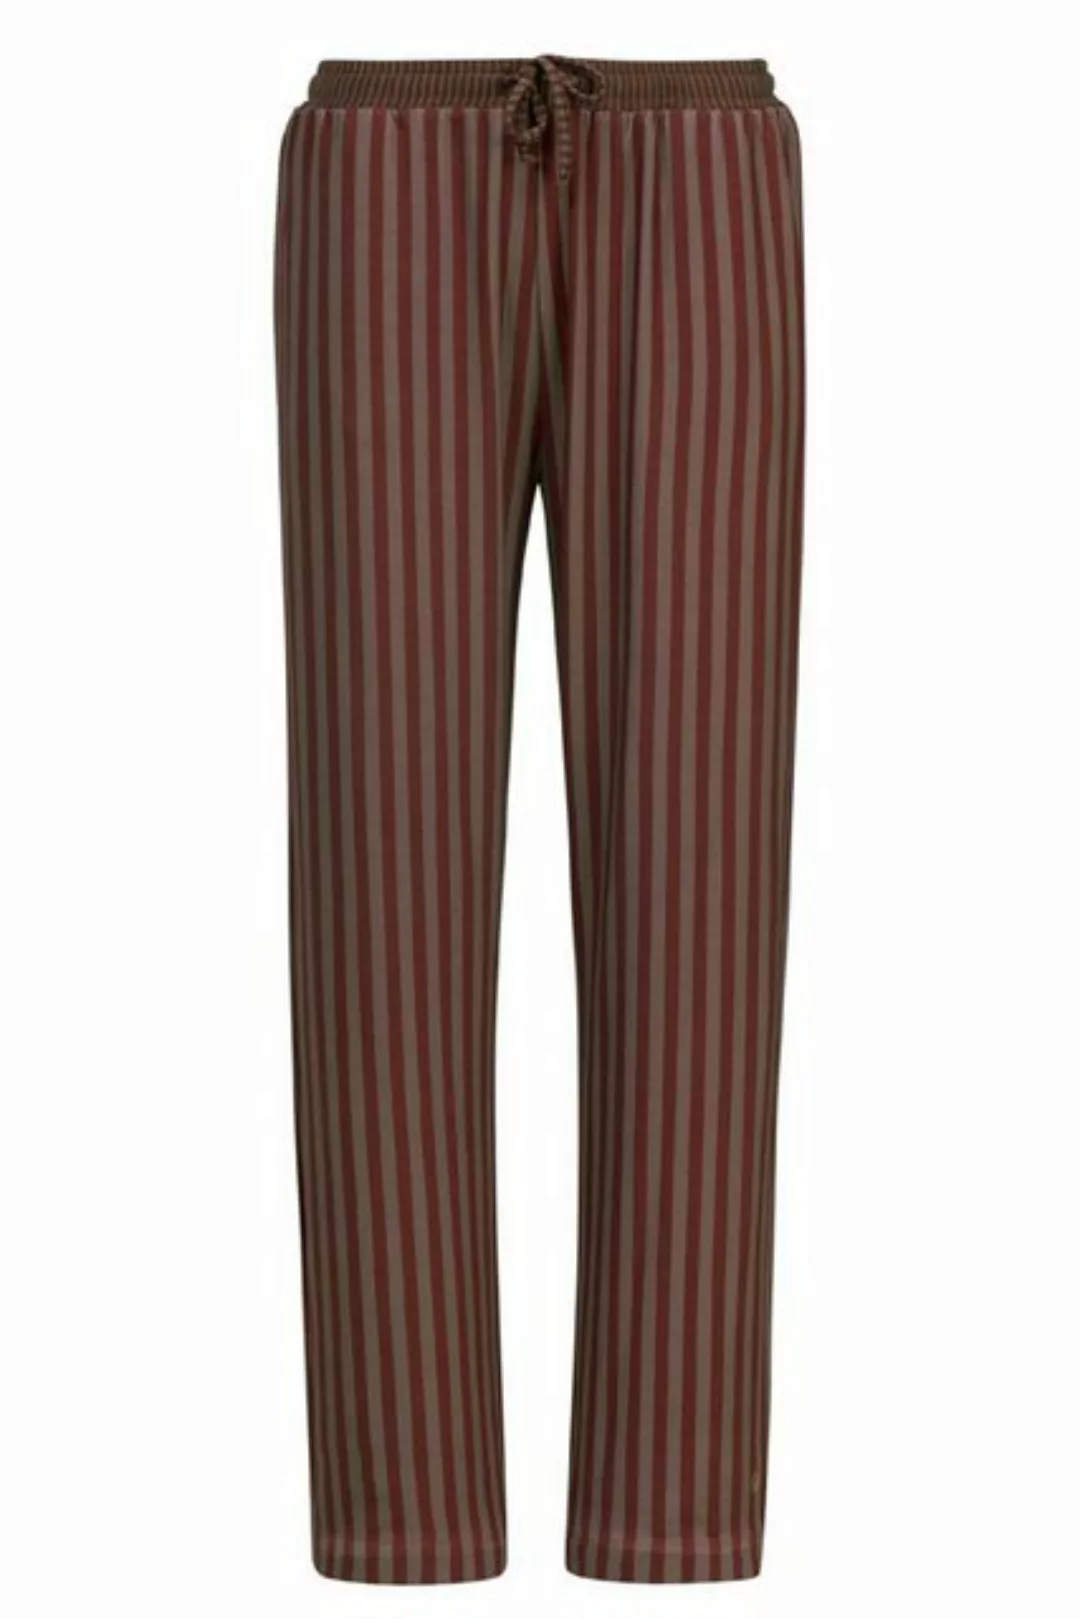 Pip Studio Belin Sumo Hose lang stripe Loungewear 2 36 mehrfarbig günstig online kaufen